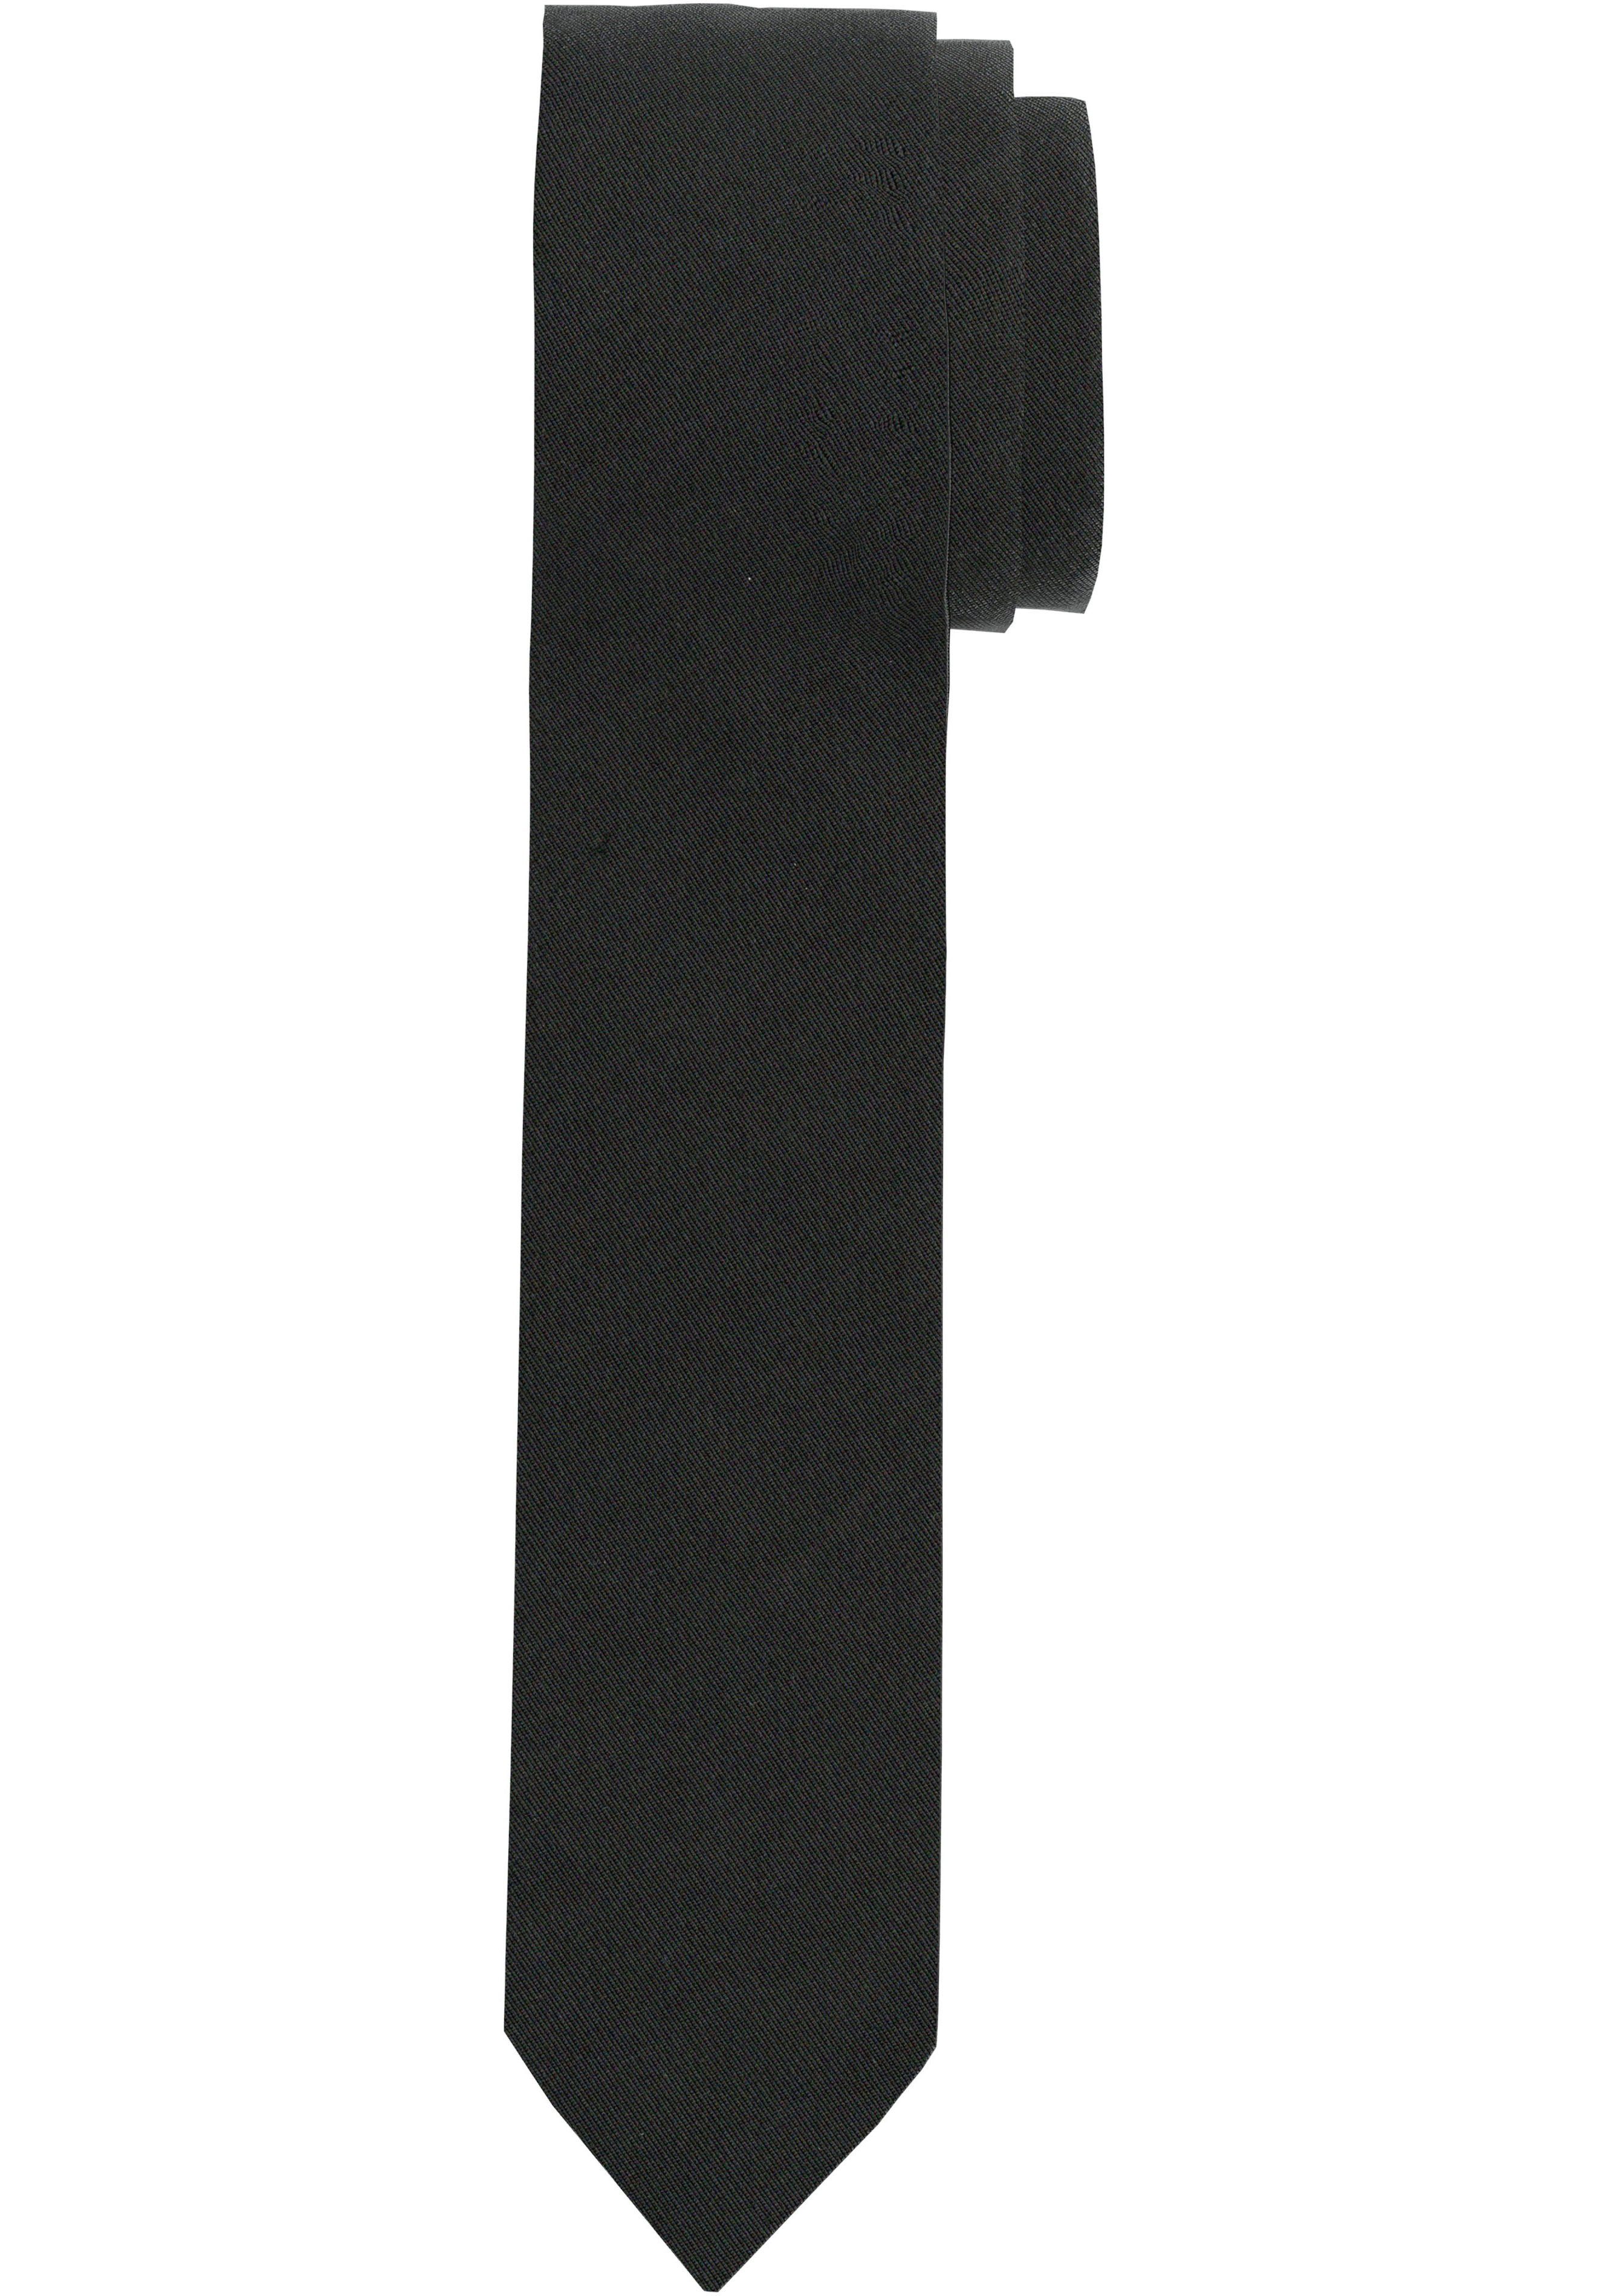 Krawatte OLYMP schwarz Slim Krawatte